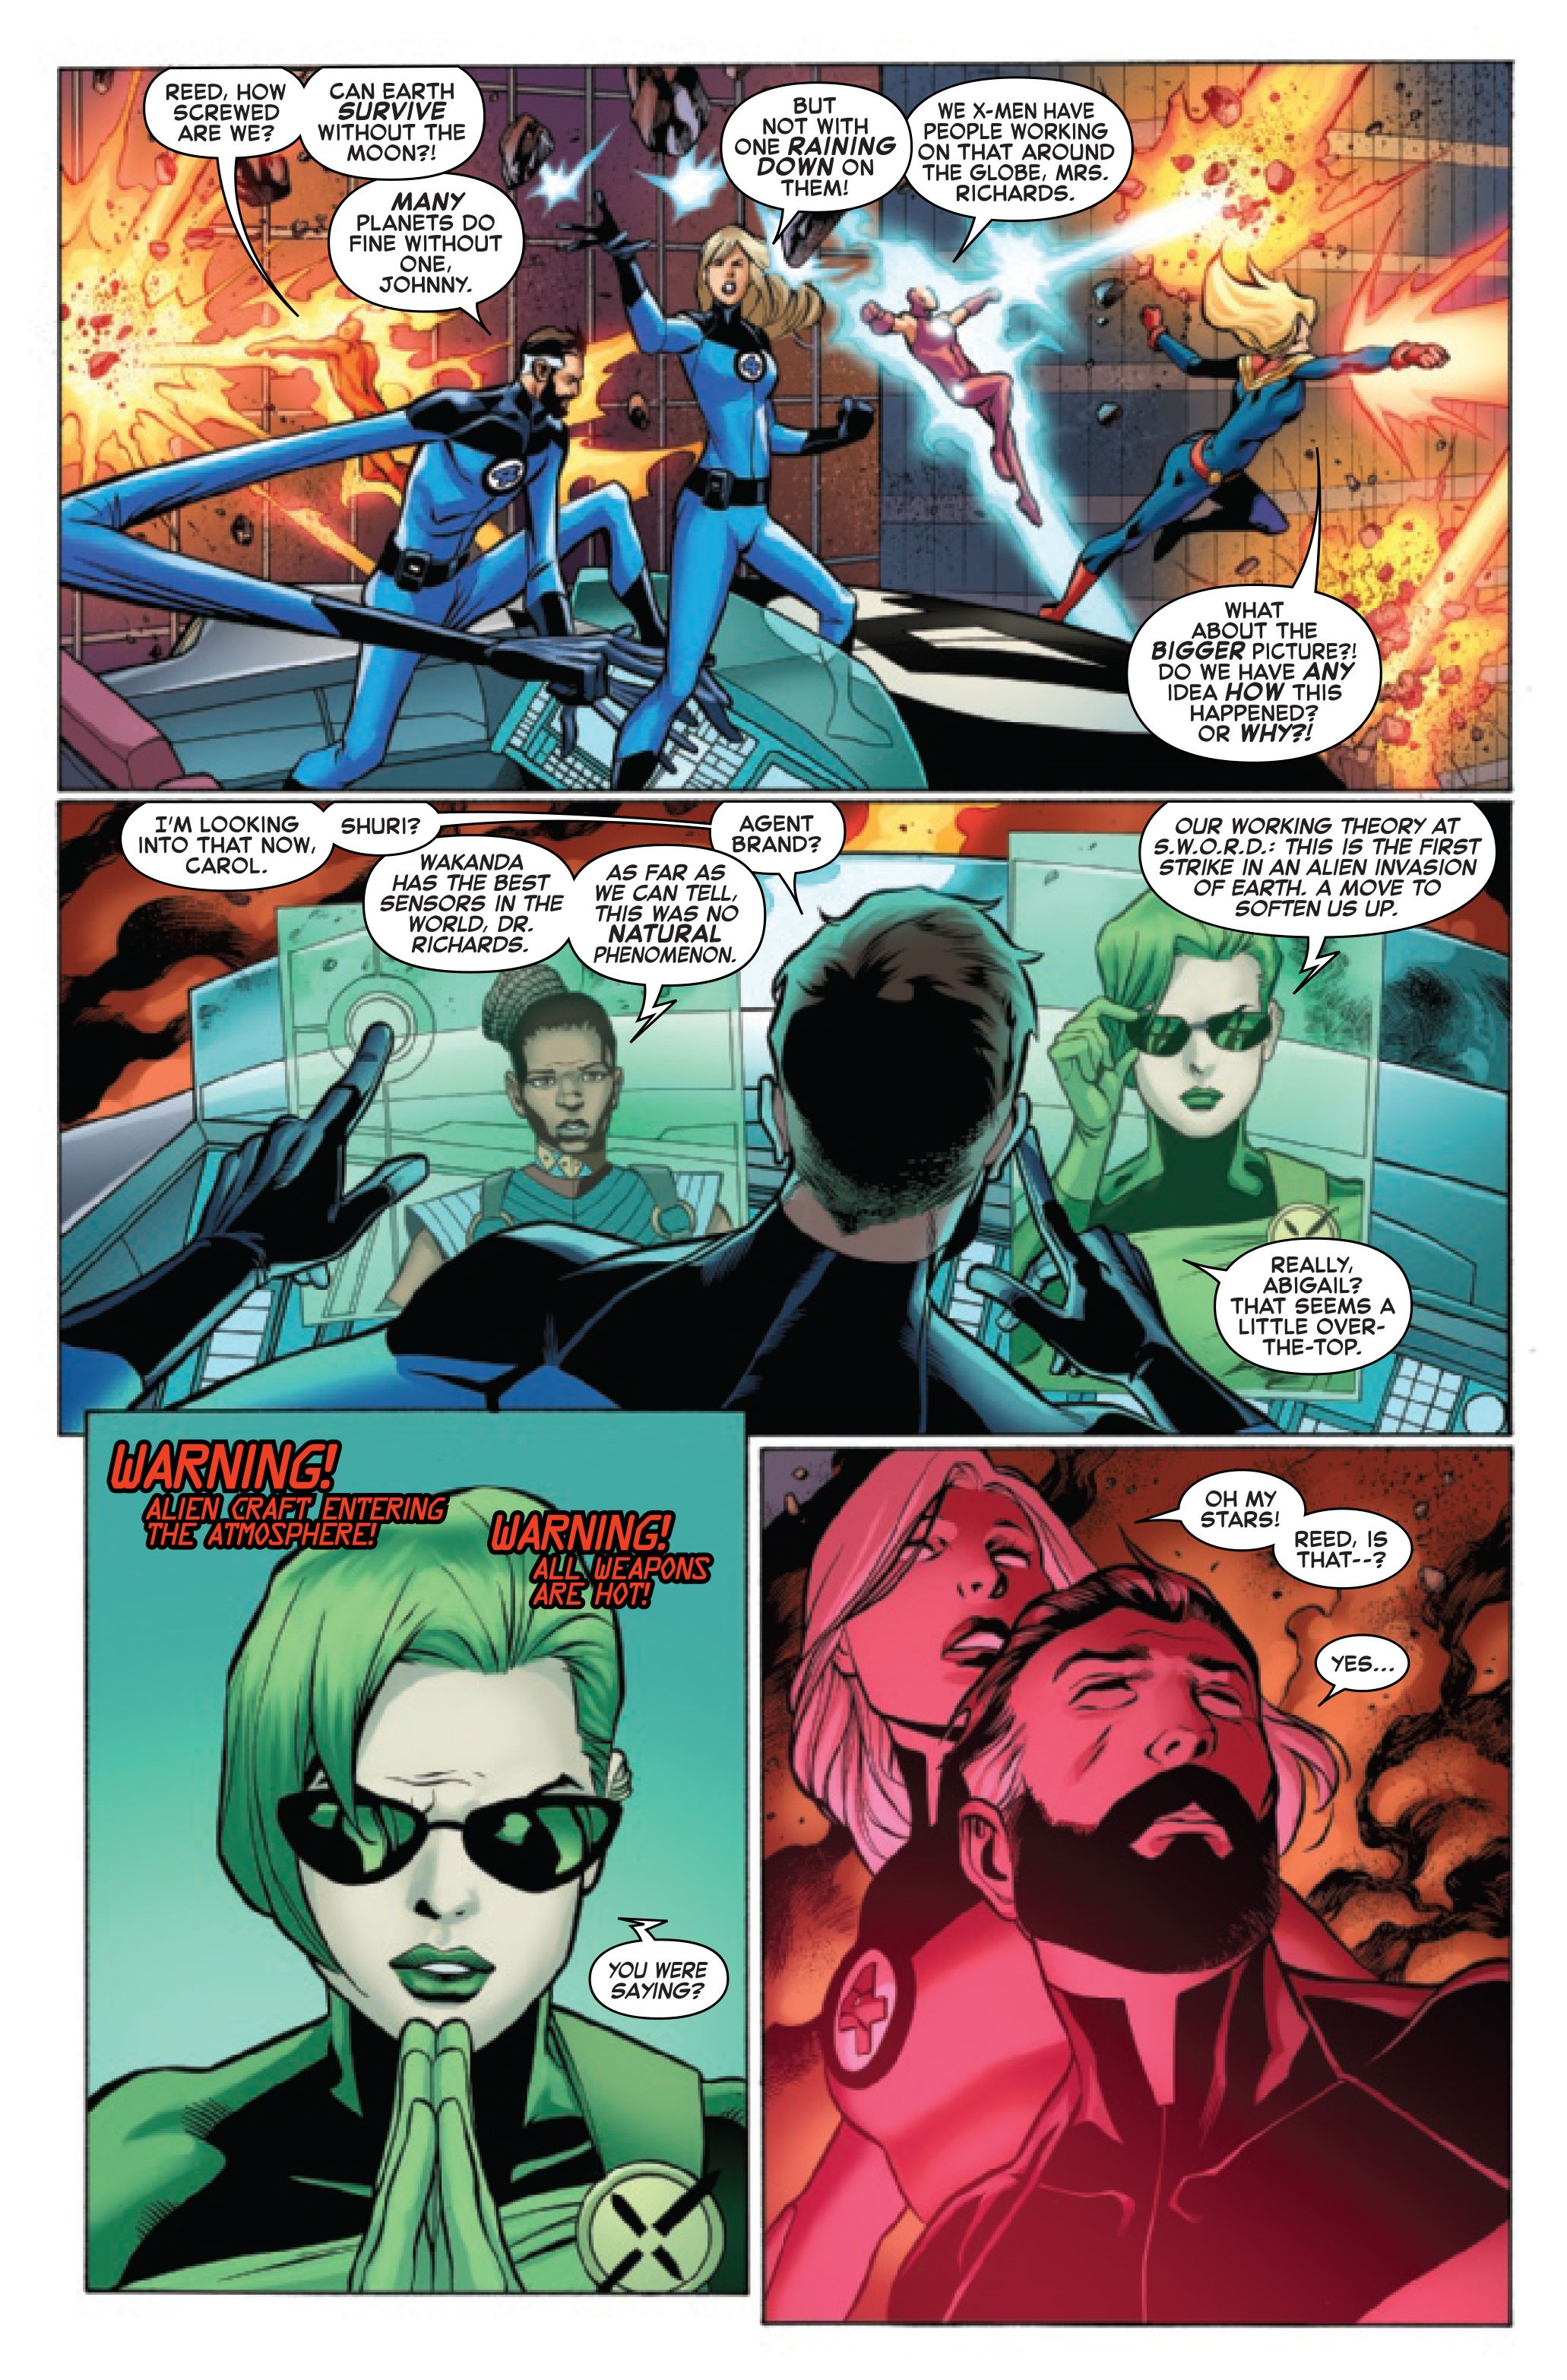 Page 4 of Fantastic Four: Reckoning War Alpha #1, by Dan Slott, Carlos Pacheco, Rafael Fonteriz and Carlos Magno.